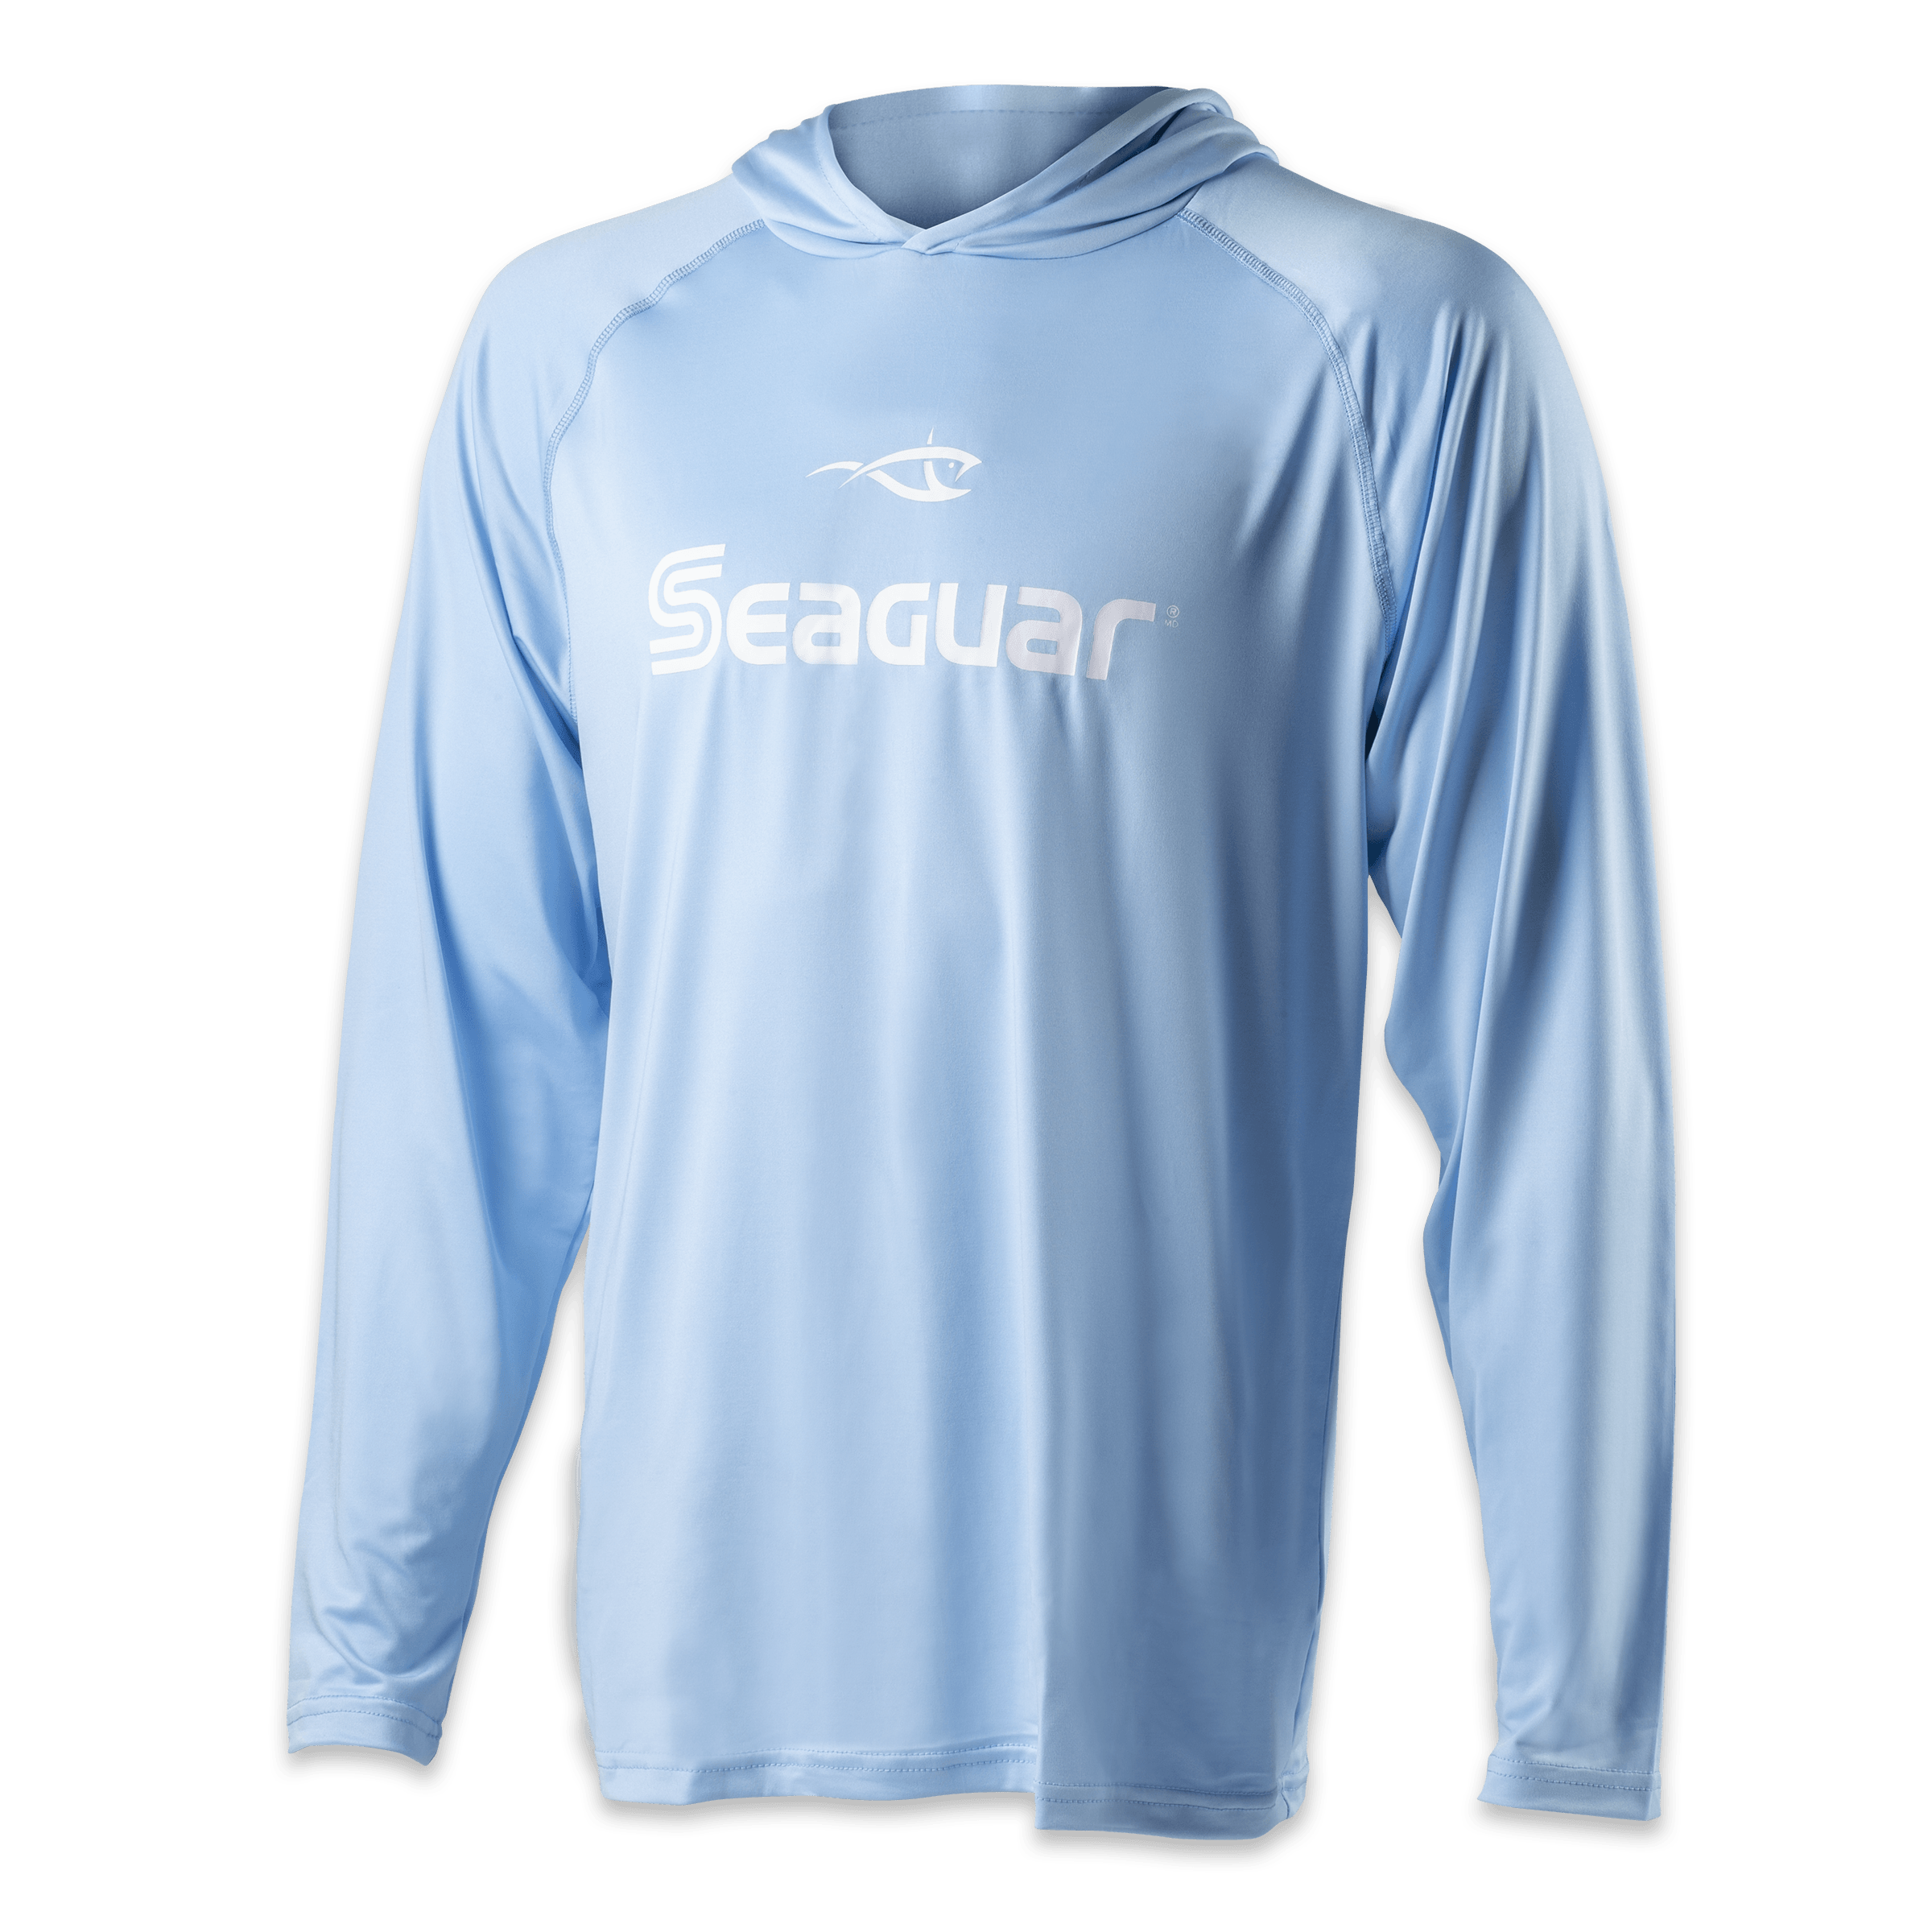 Men's UPF 50+ UV Long Sleeve Athletic Shirts - Cycorld